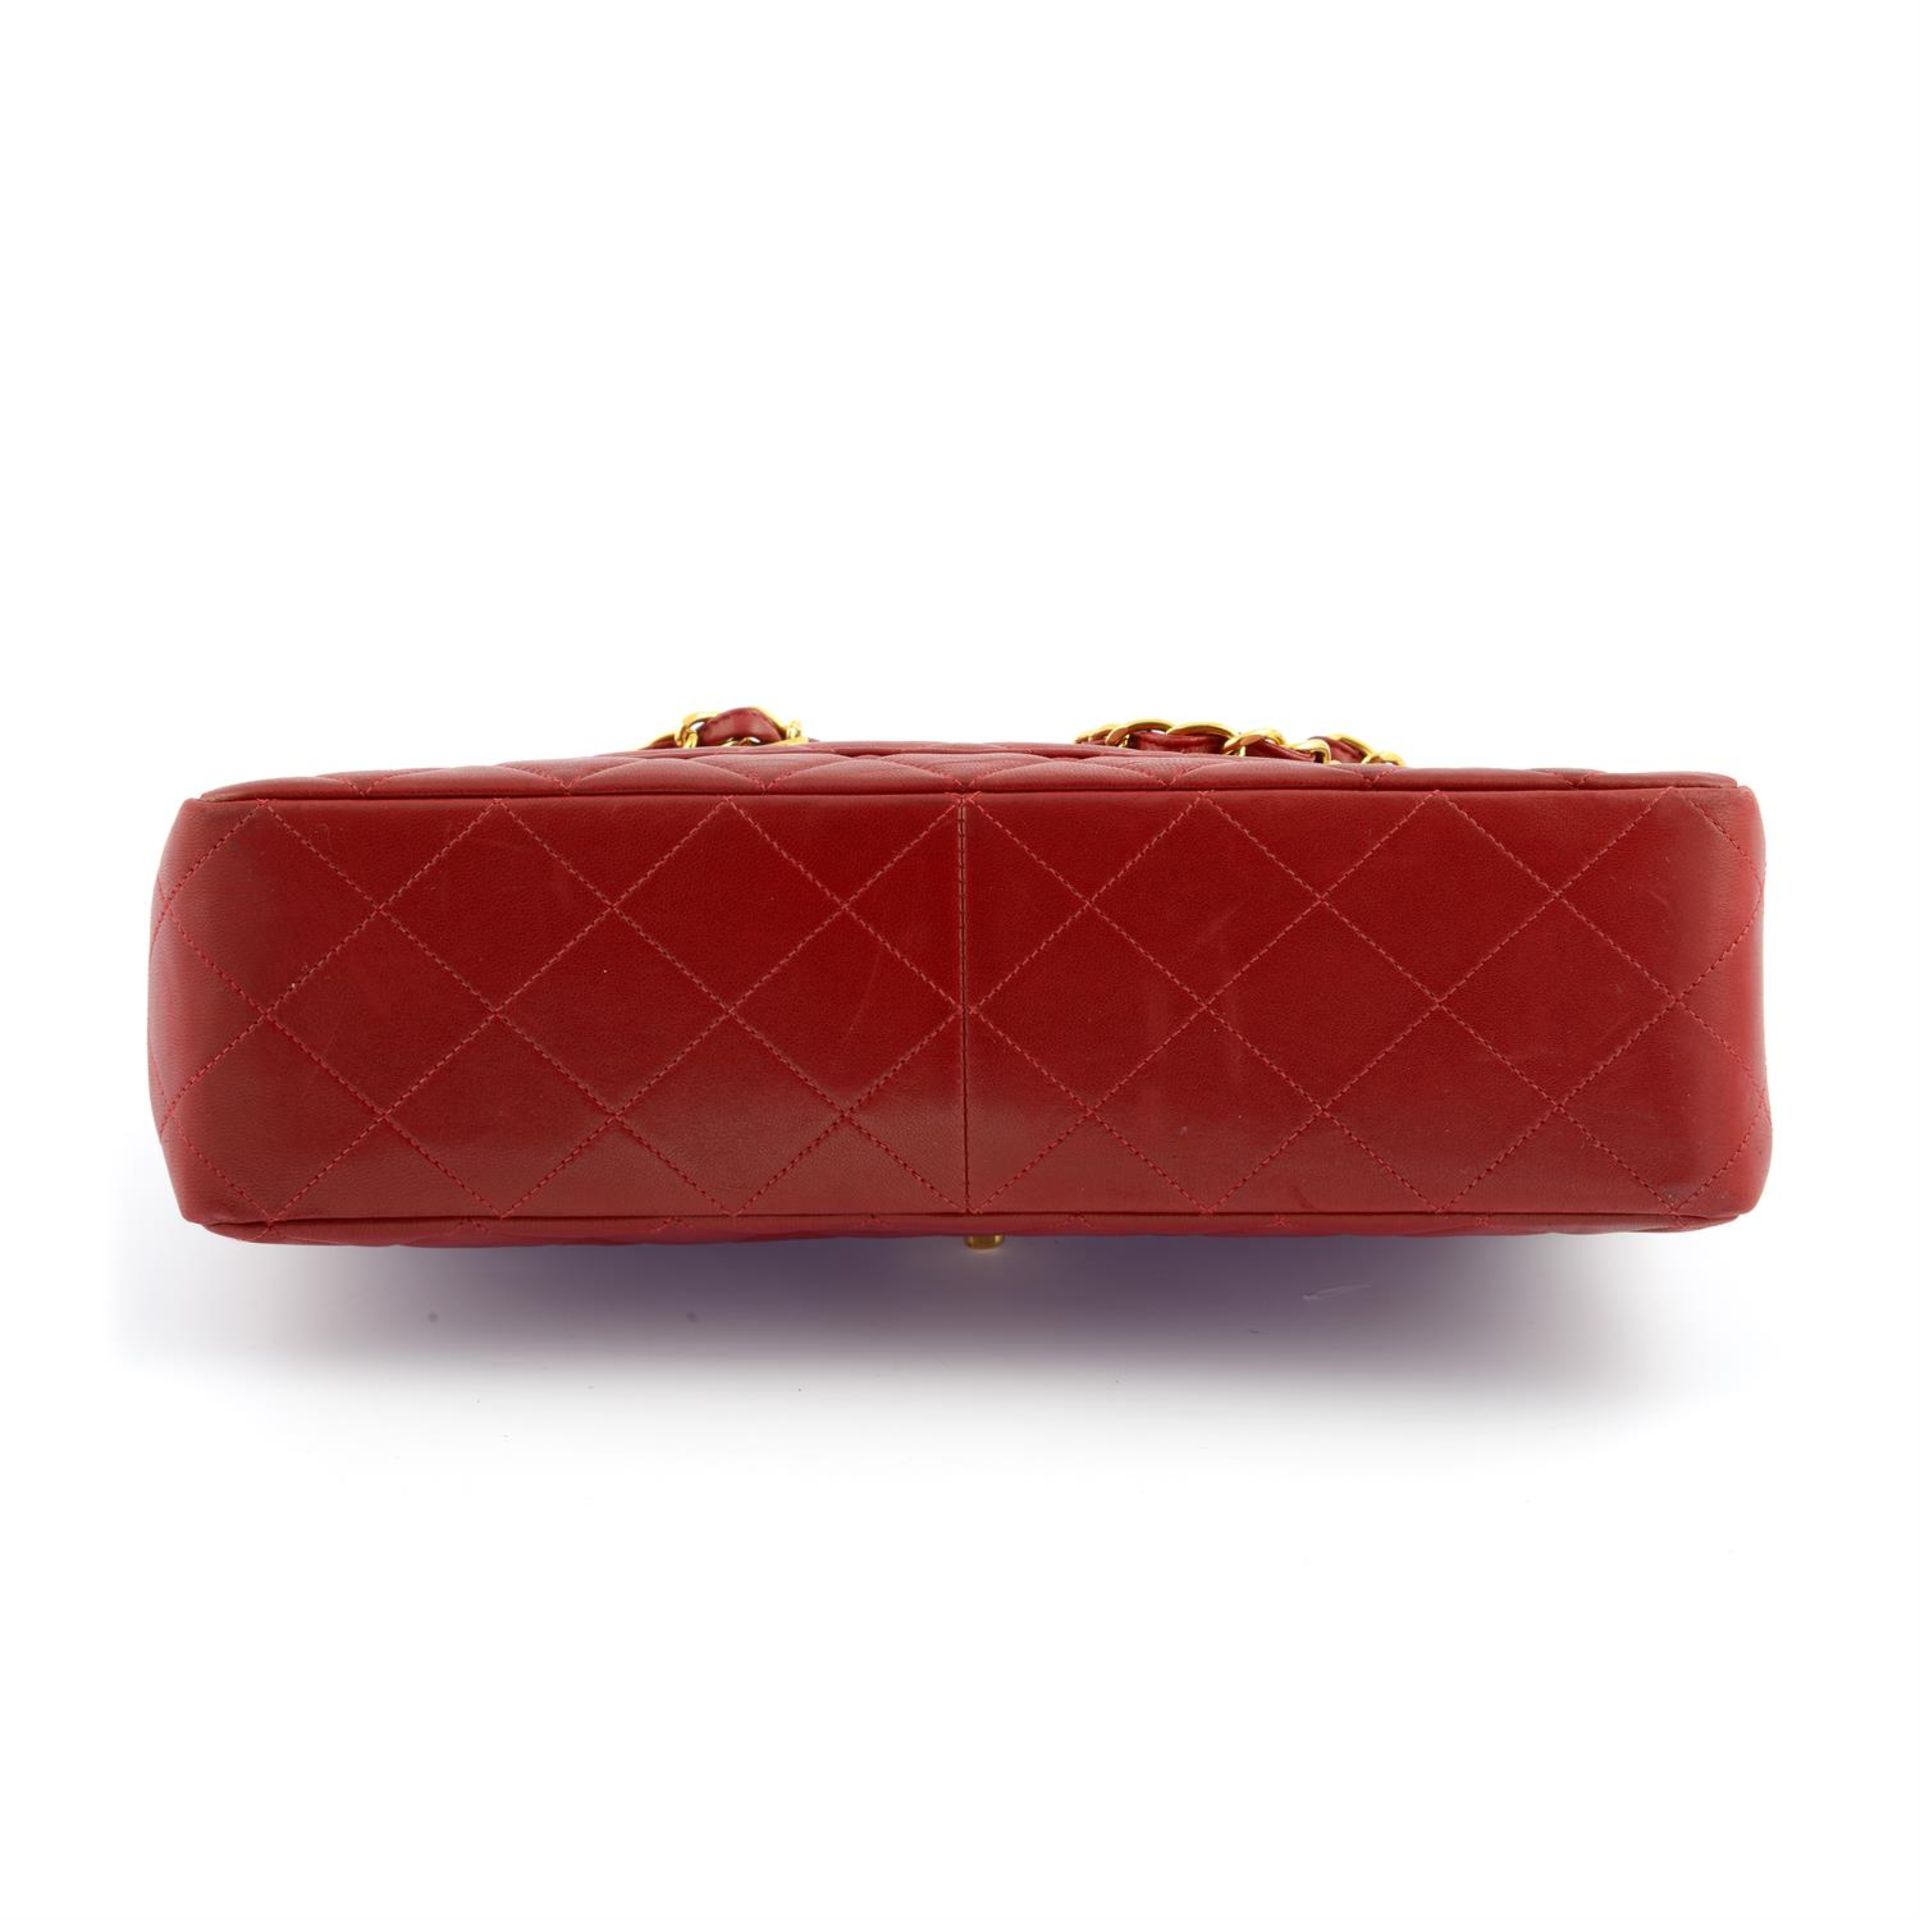 CHANEL - a red lambskin leather Jumbo flap handbag. - Image 4 of 6